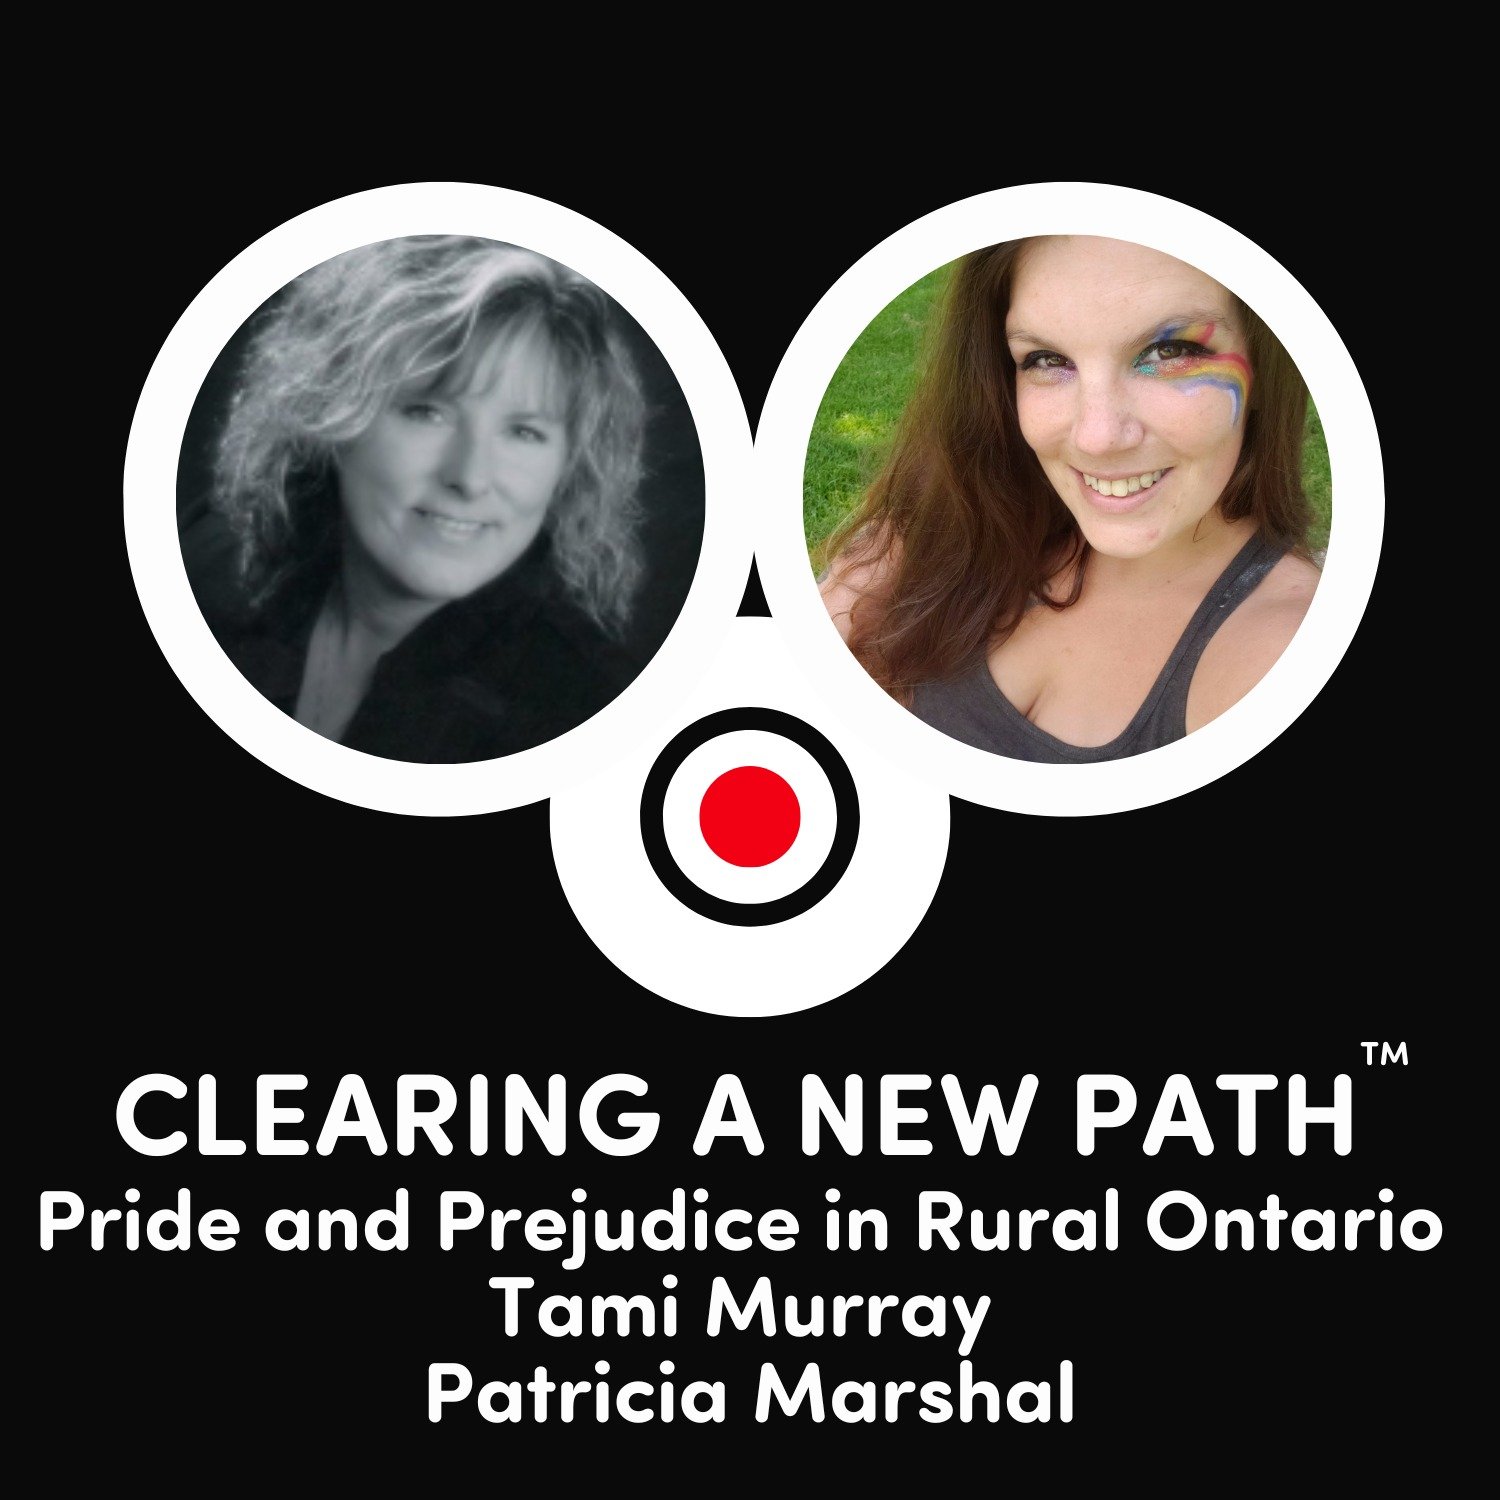 Pride and Prejudice in Rural Ontario - Tami Murray and Patricia Marshal